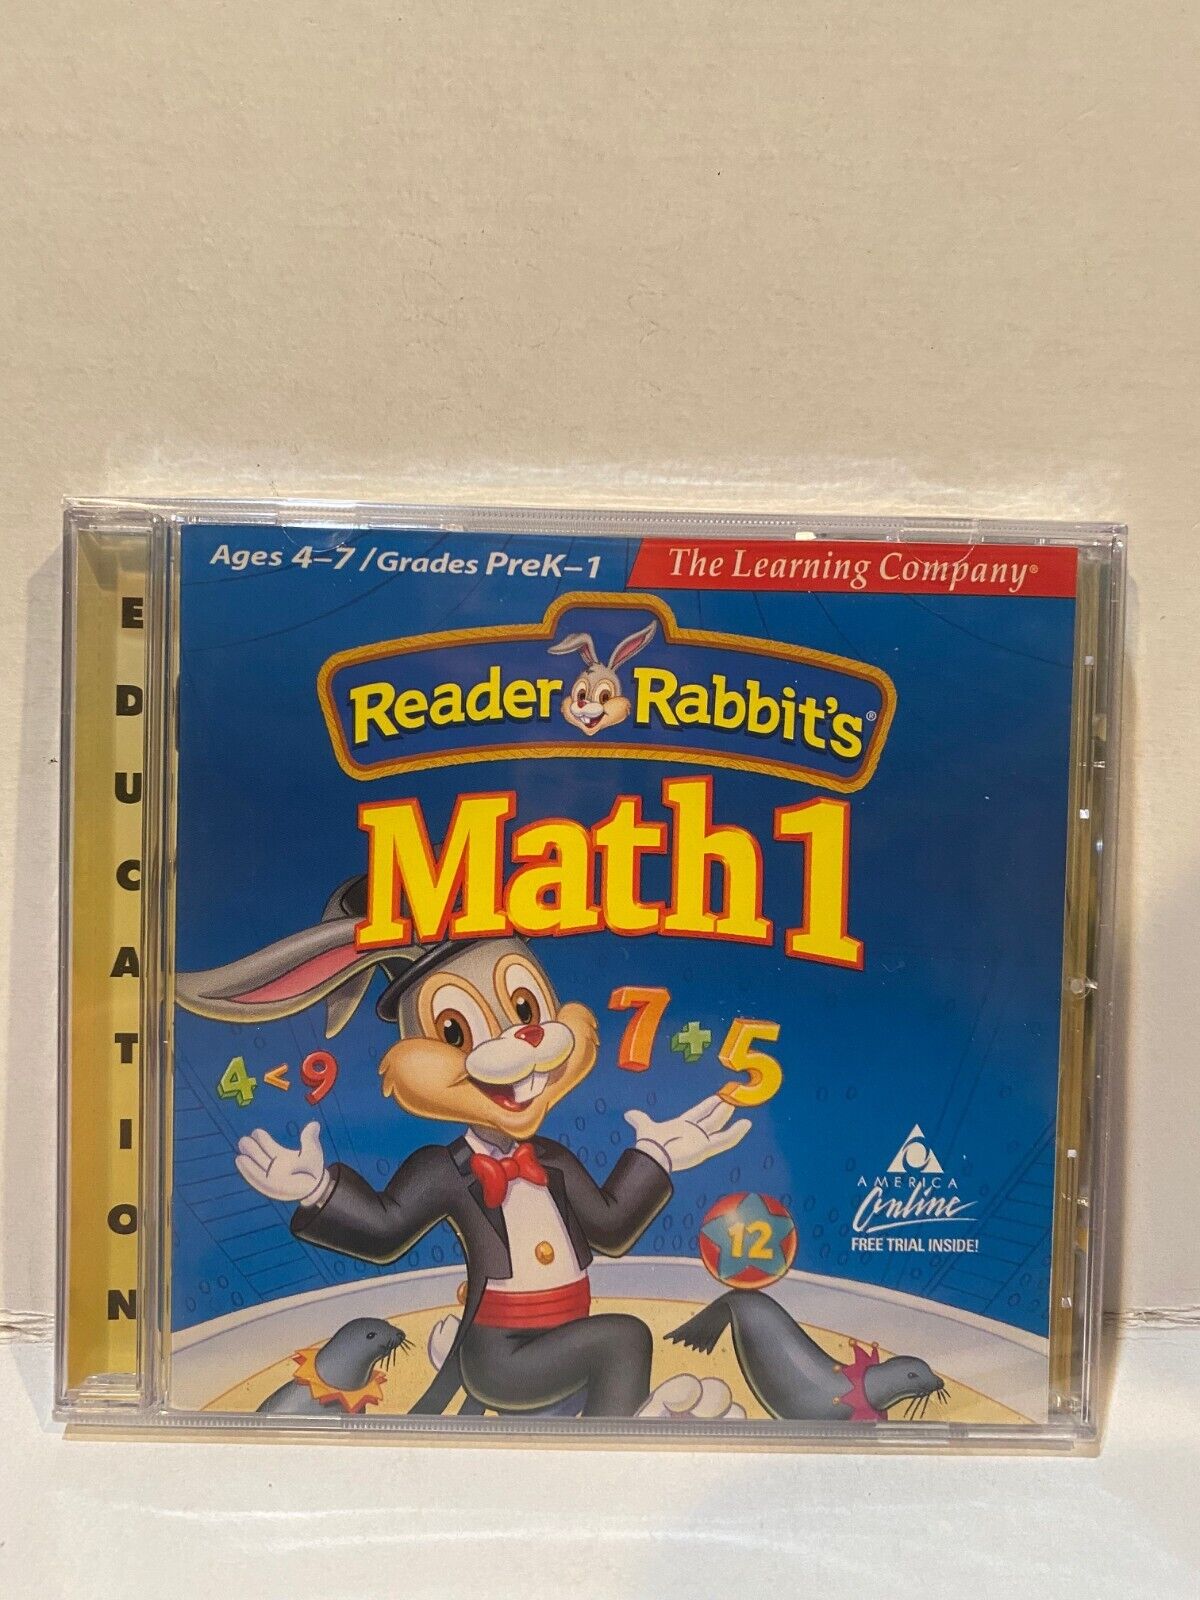 Reader Rabbit’s Math 1 CD-ROM (Ages 4-7)